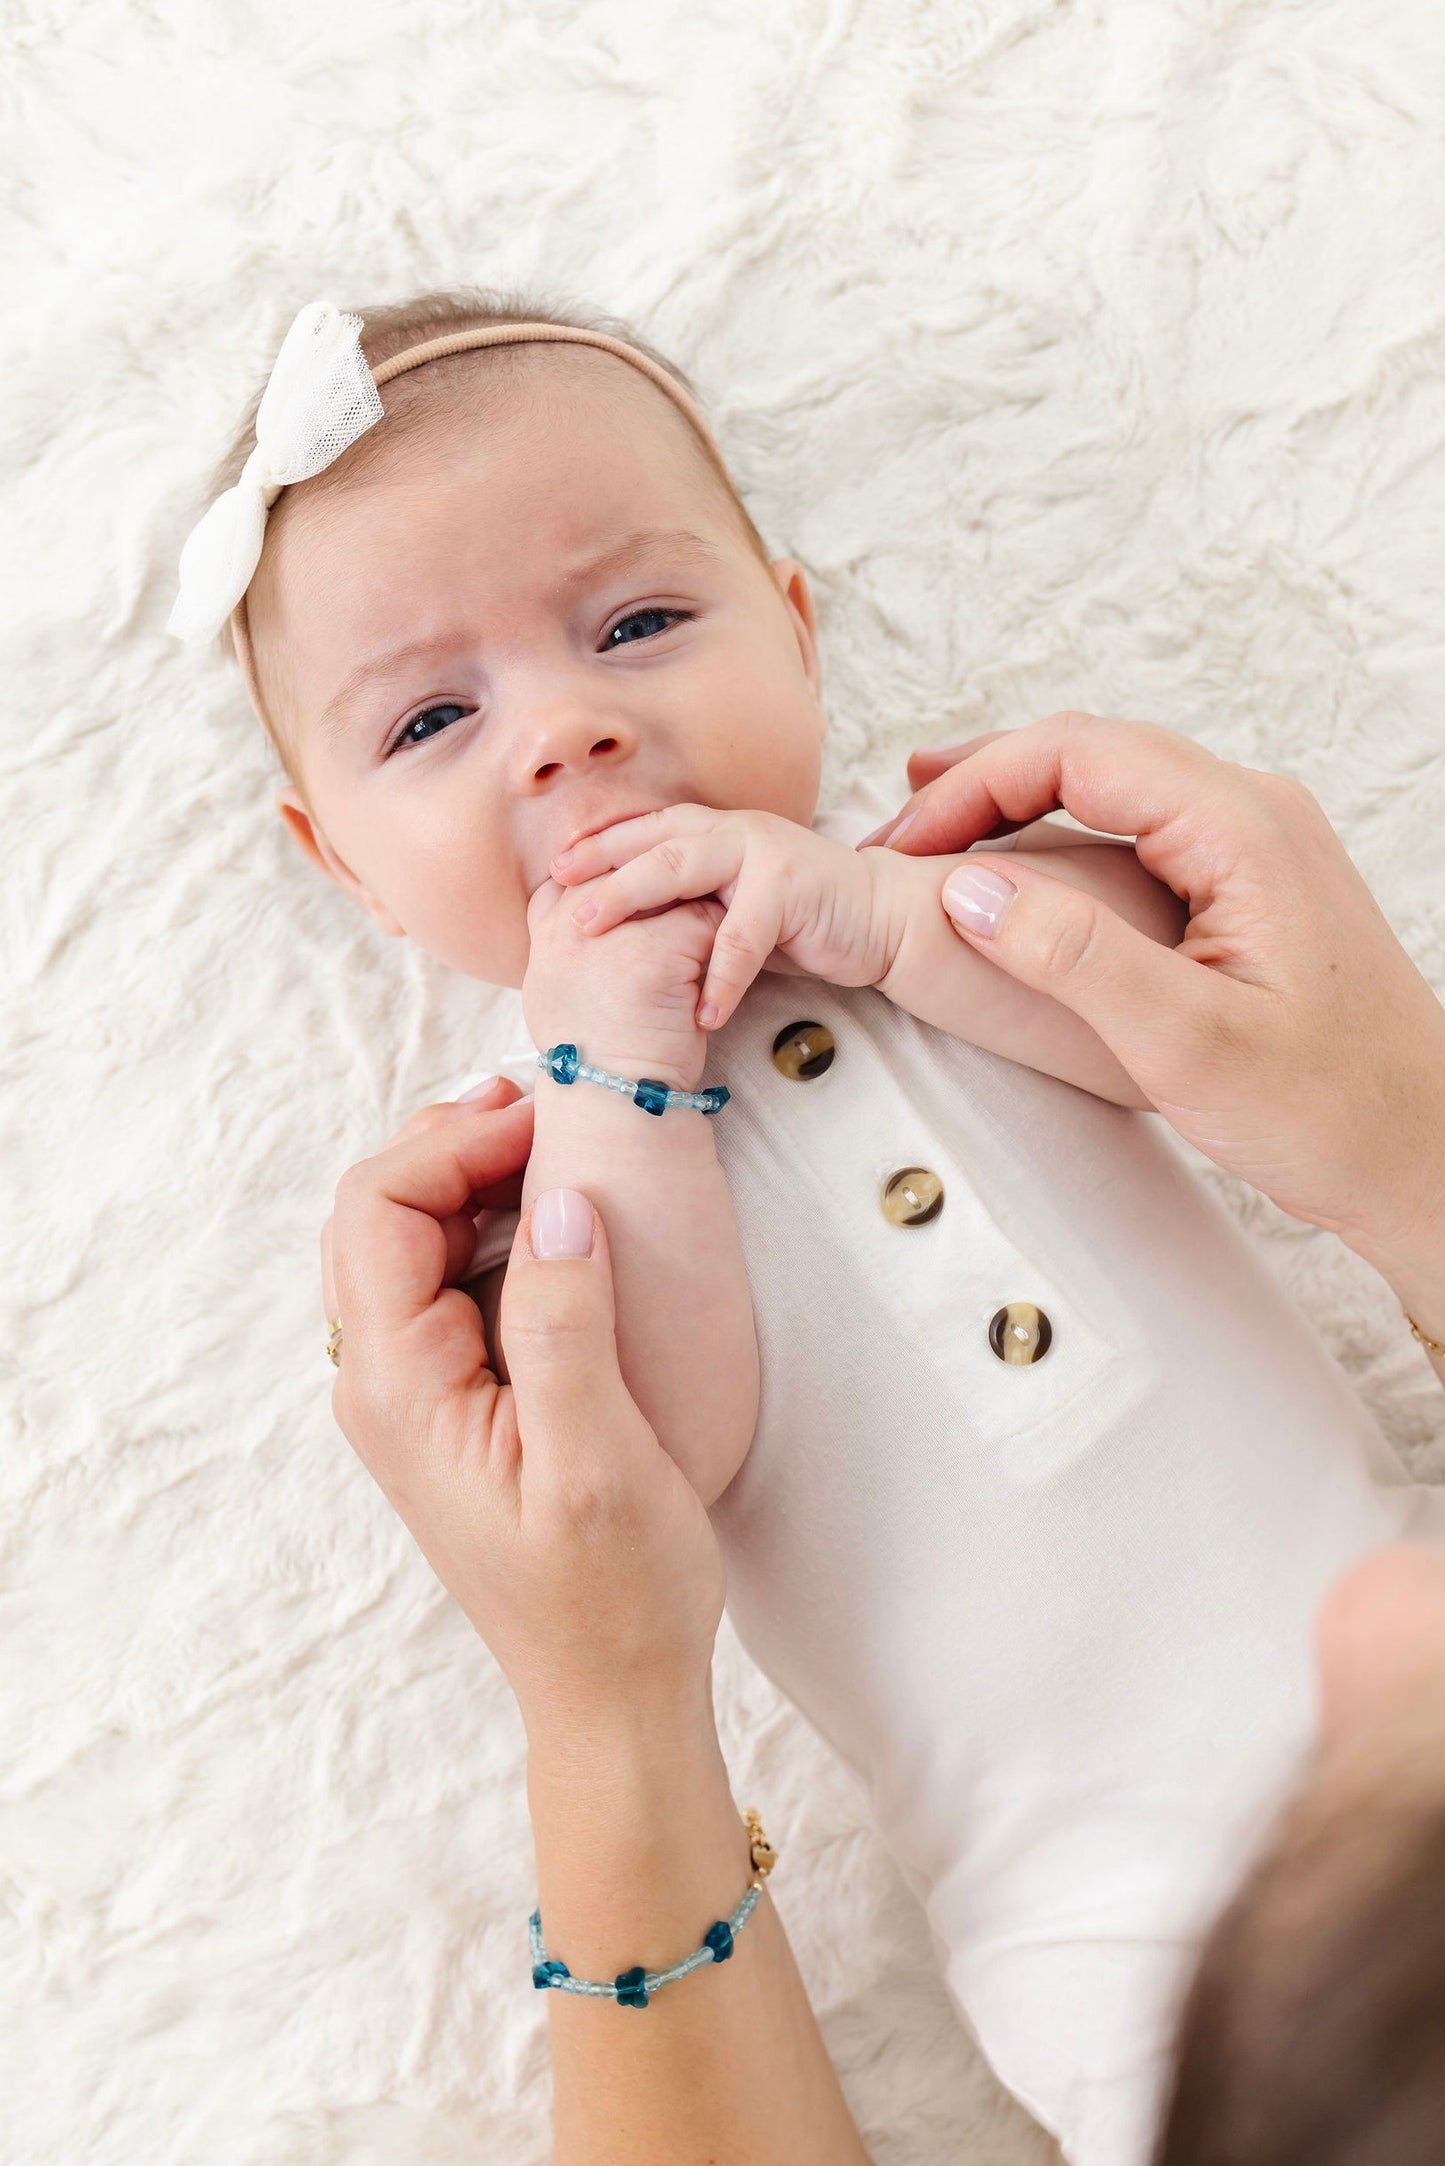 0-3 Years Baby Bracelet Children Adjustable Bangle Gold Color Bracelets  2Pcs/Lot | eBay